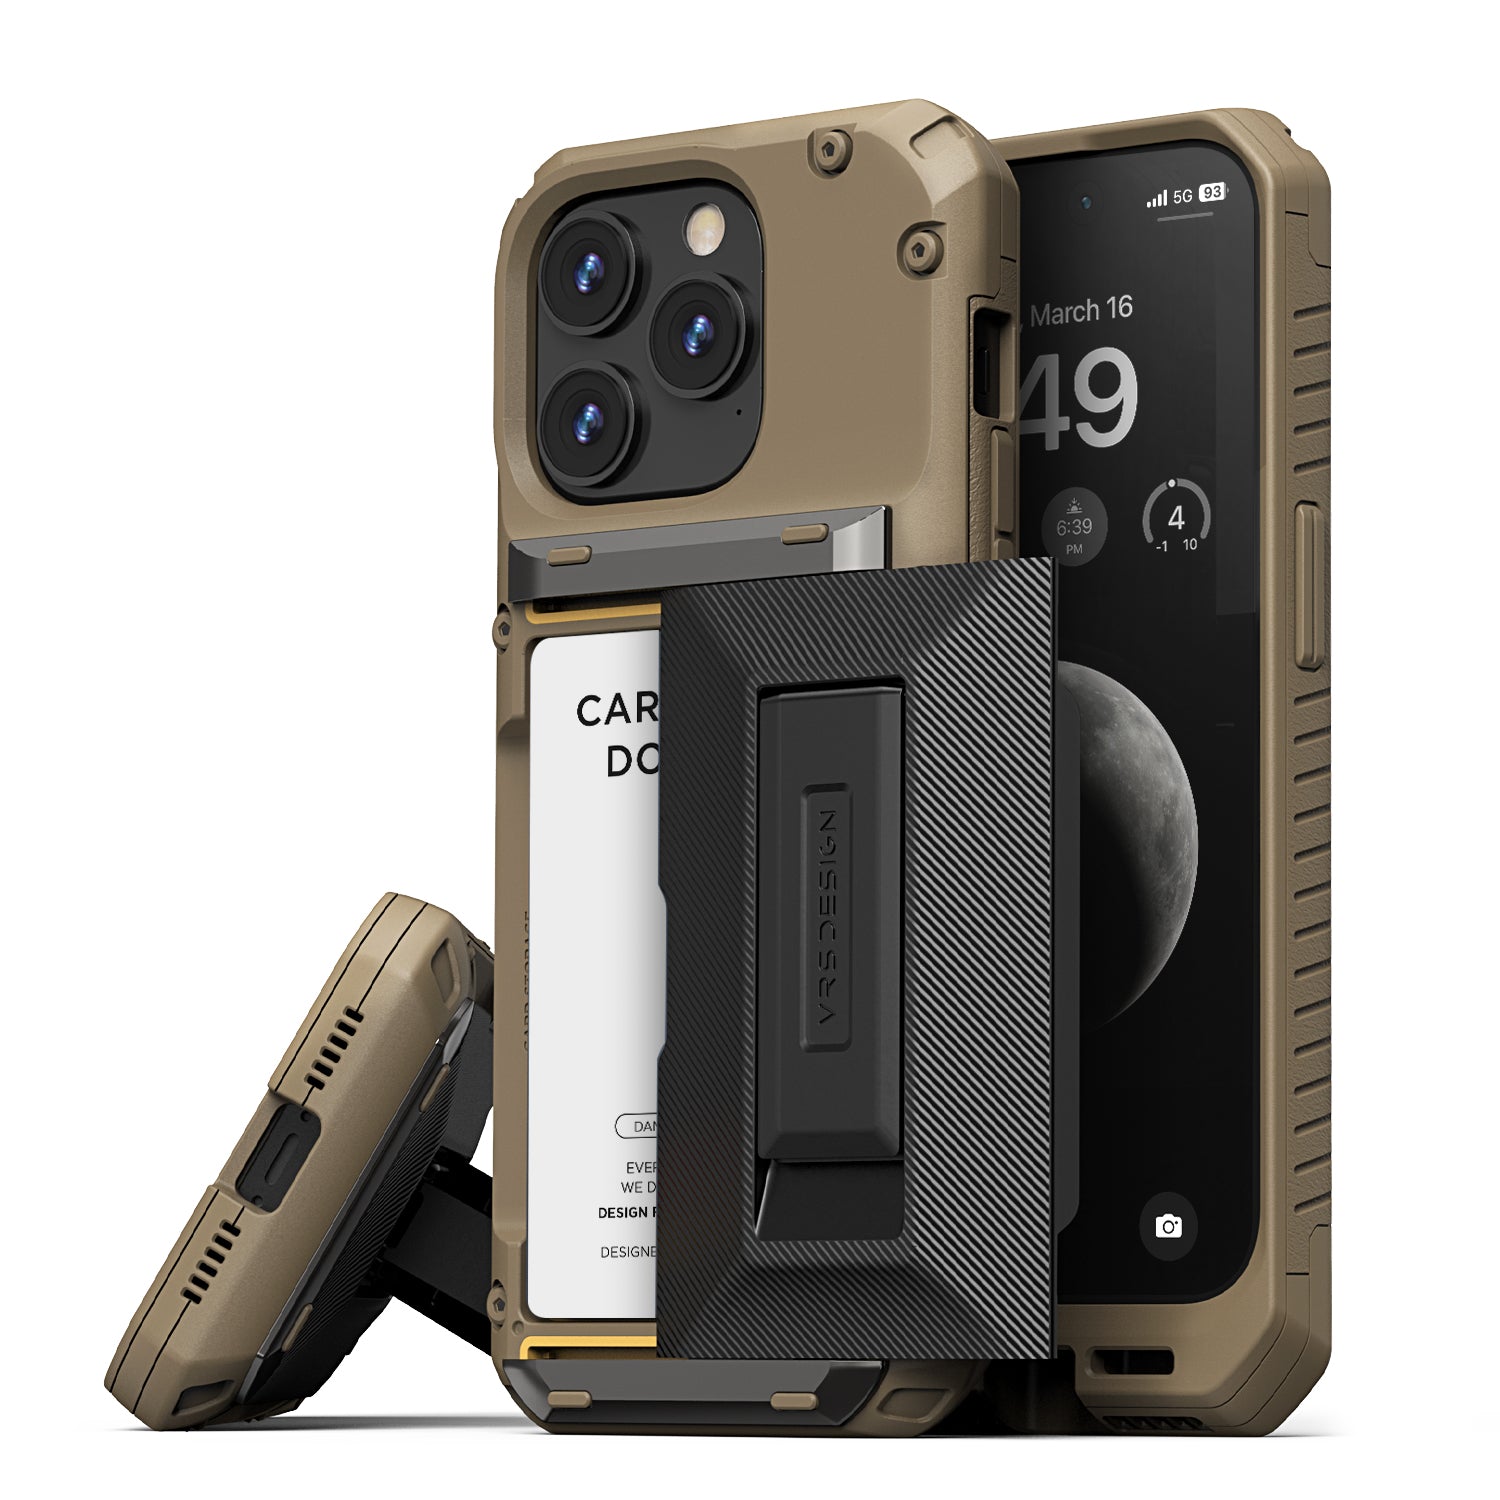 iPhone 15 Pro Max Case Damda Glide Ultimate